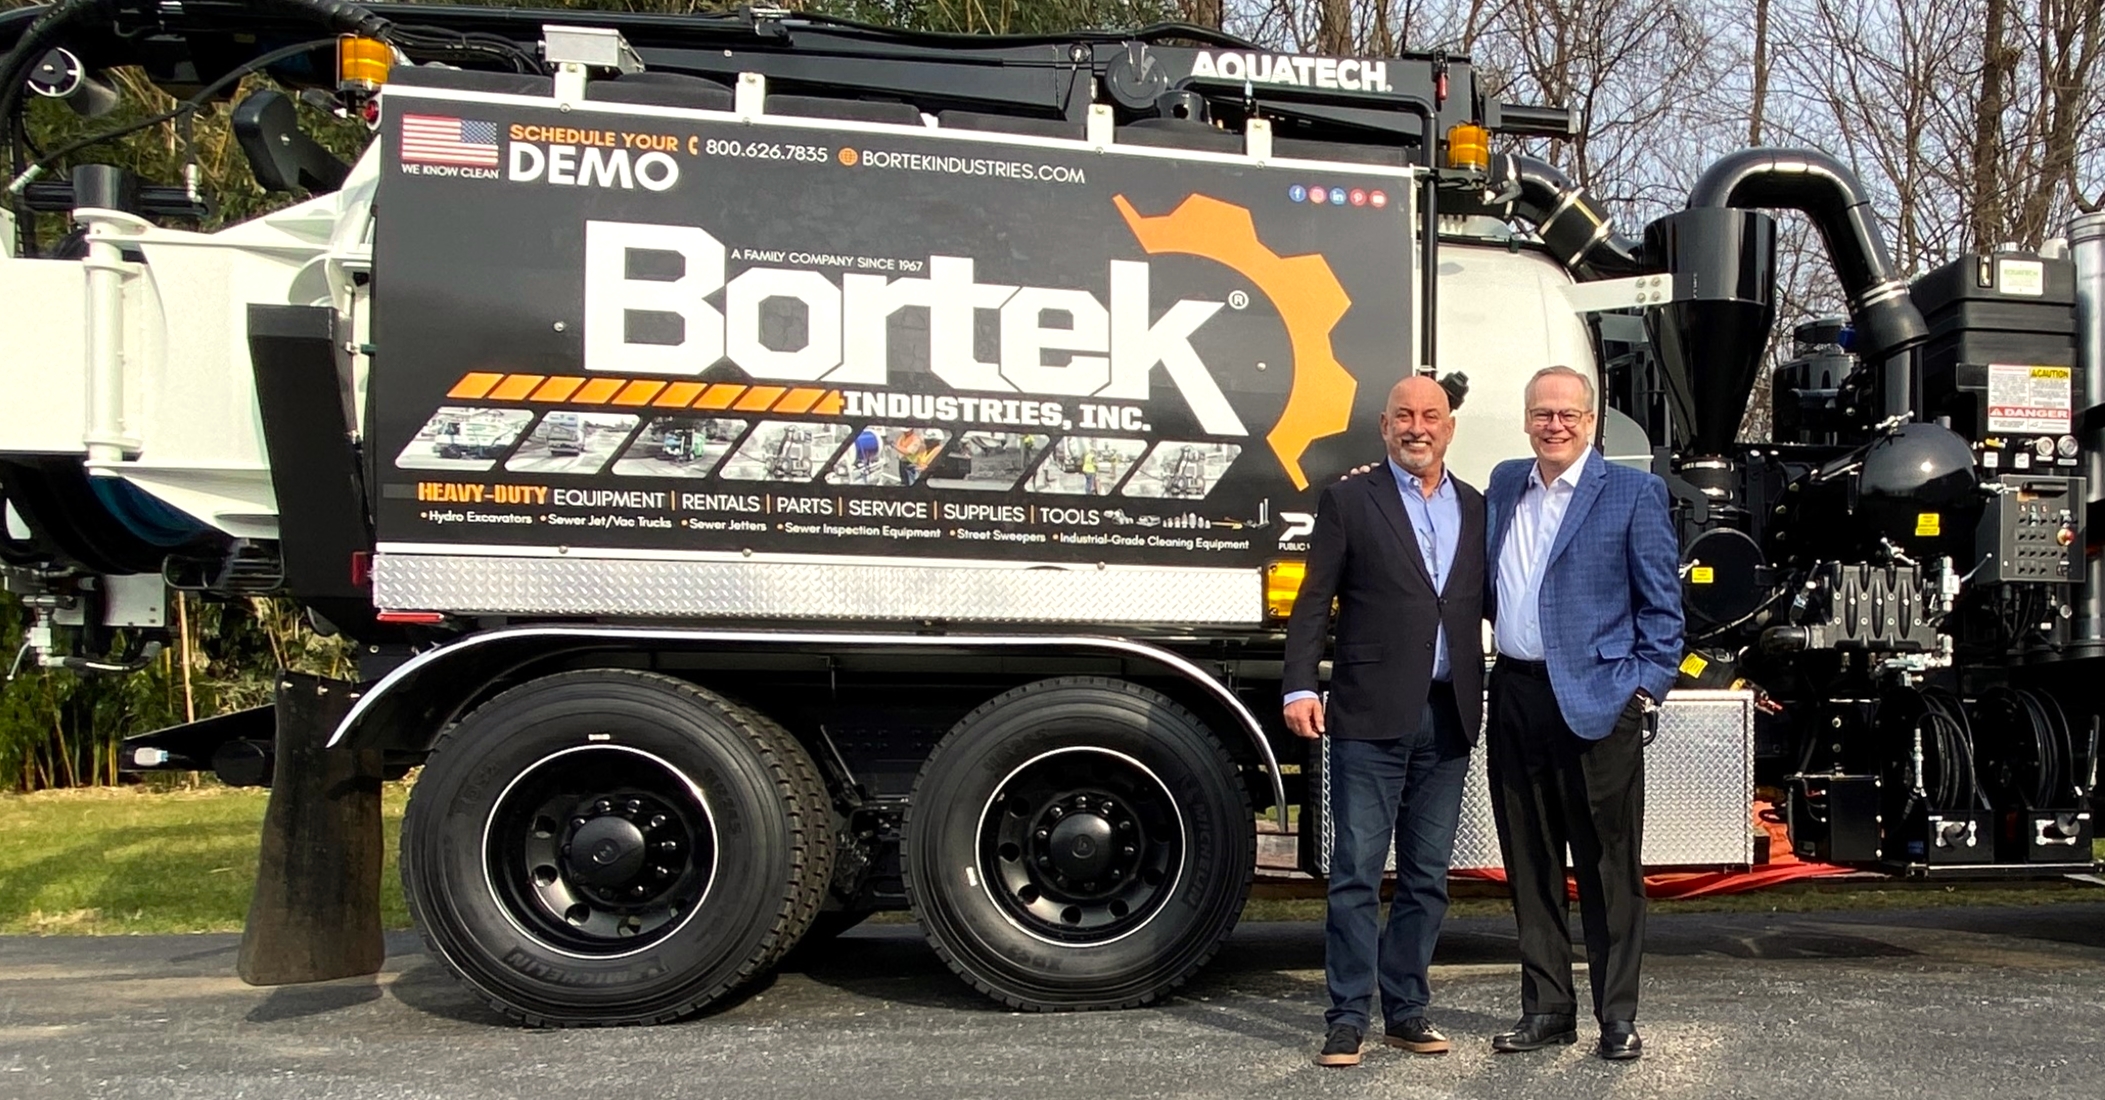 Bobby Rahal Jeff Boarman- Bortek Industries Inc IndyCar Sponsor- Aquatech Hivac-Hydro Excavator Sewer Jetter